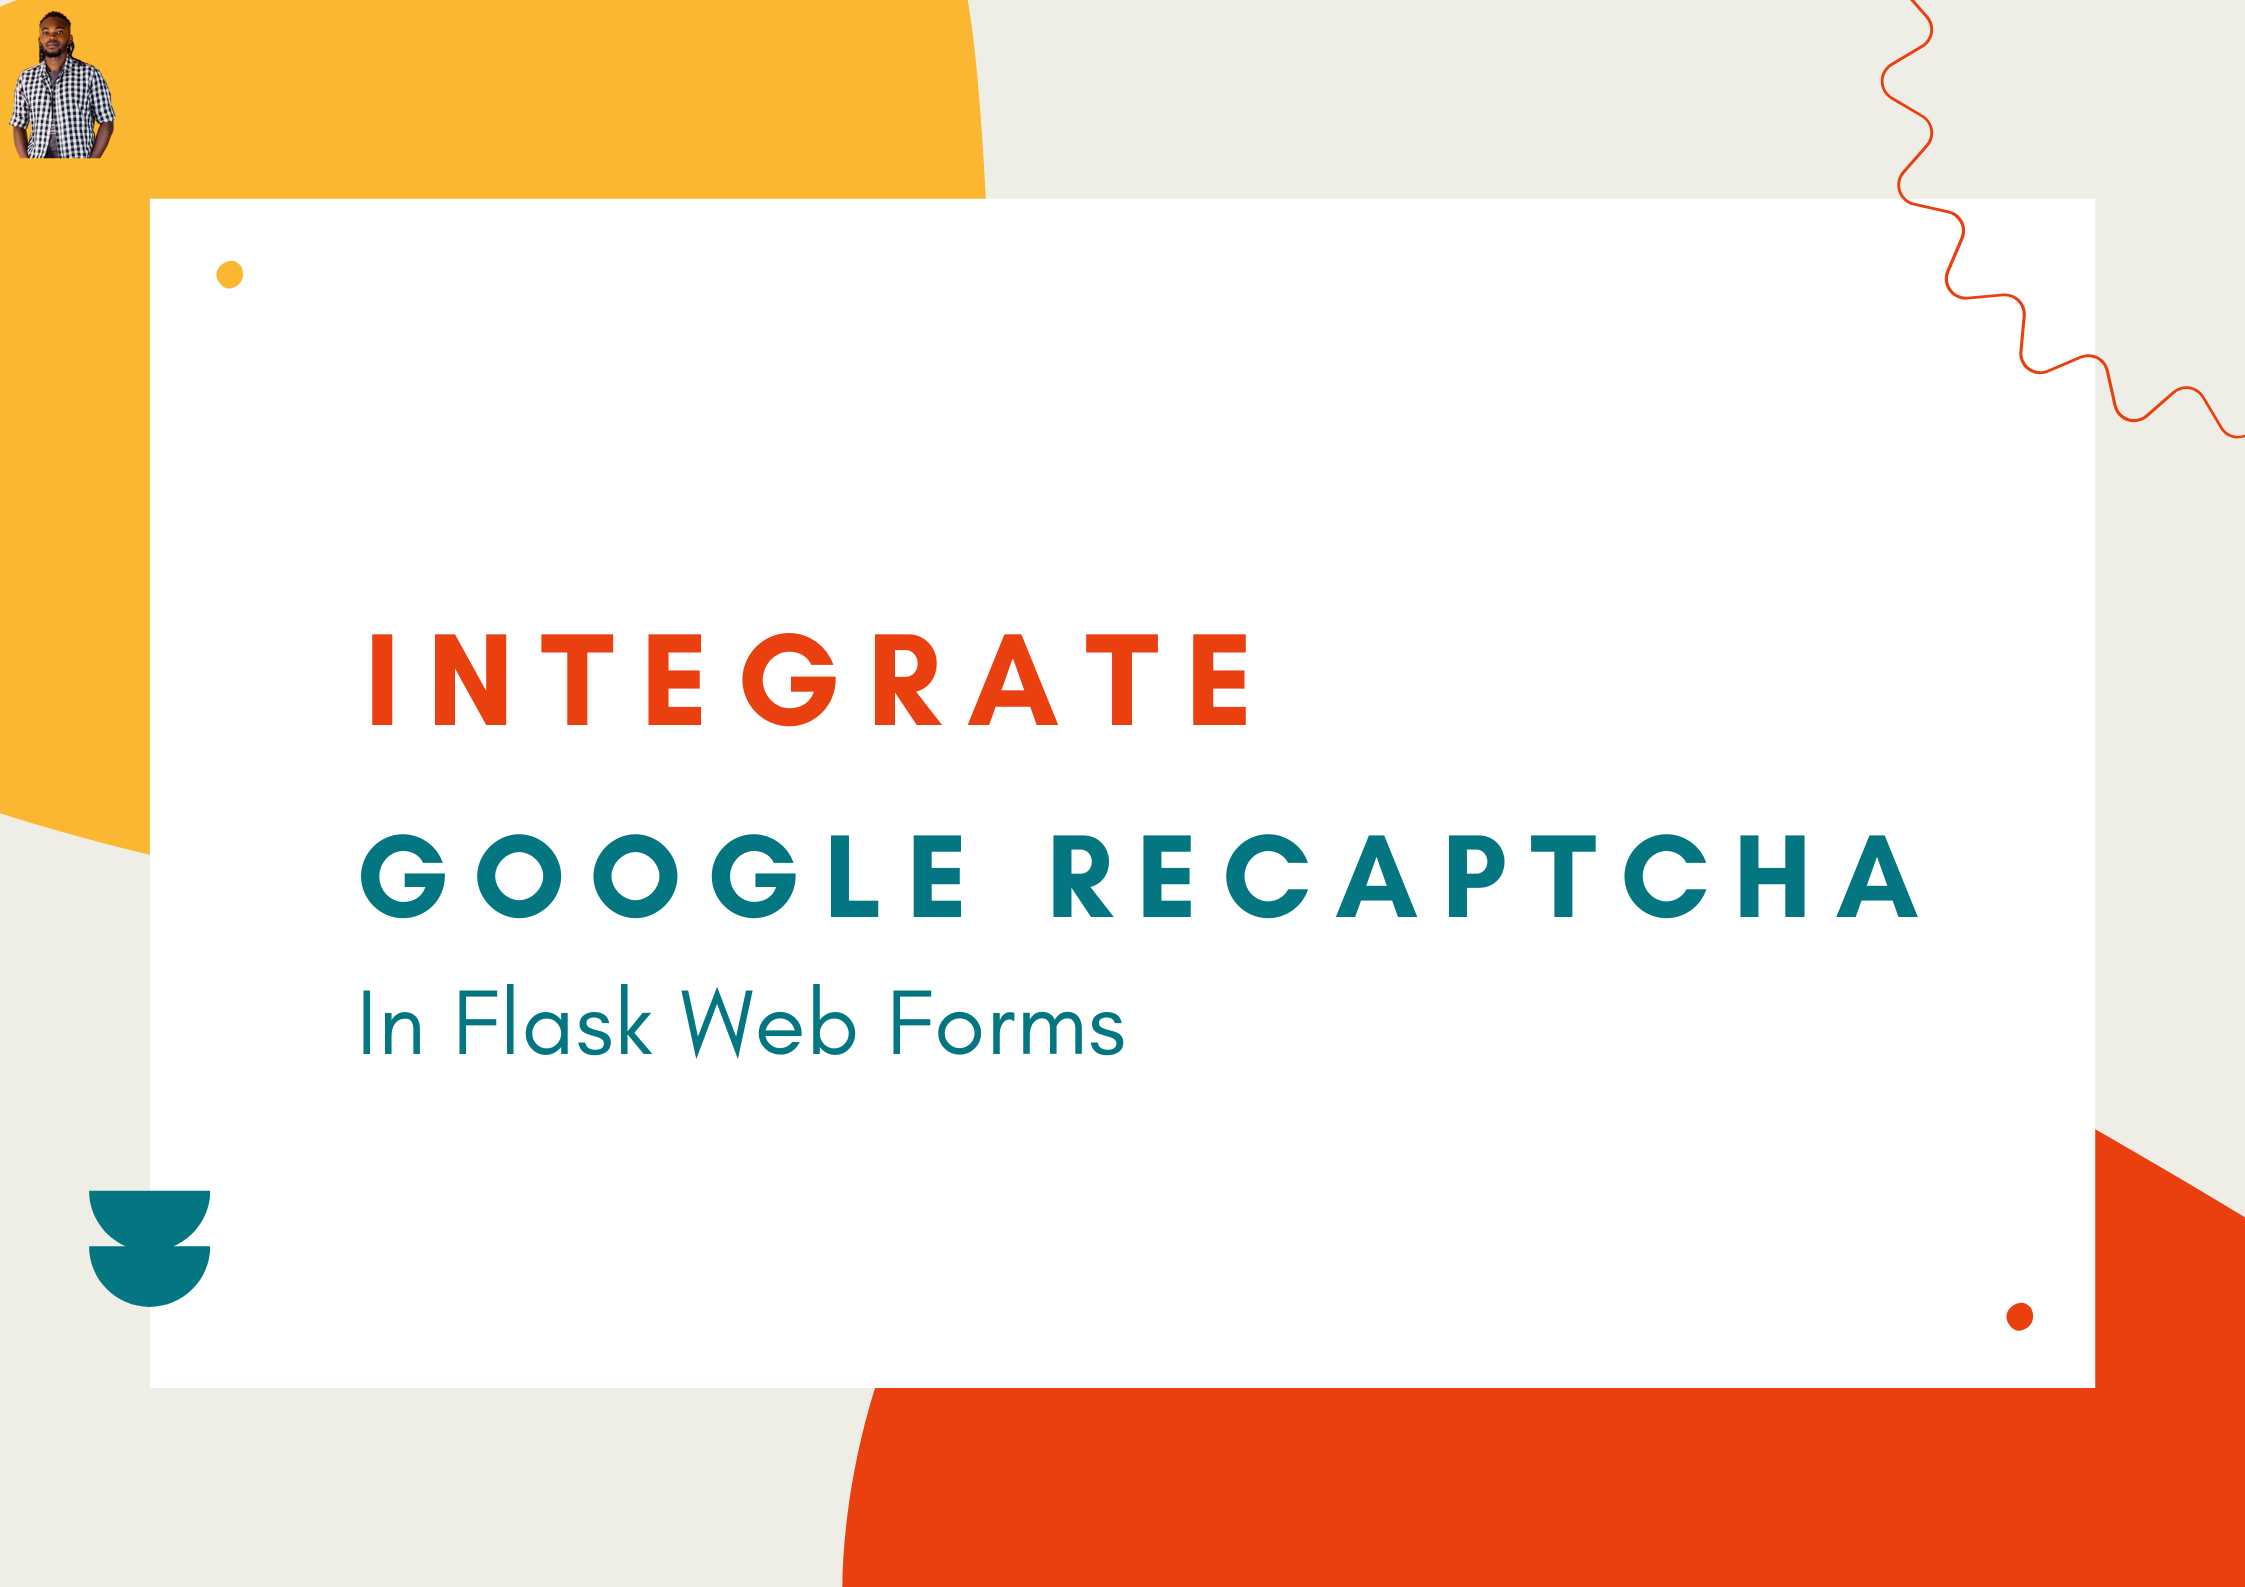 Integrate Google Recaptcha In Flask Web Forms